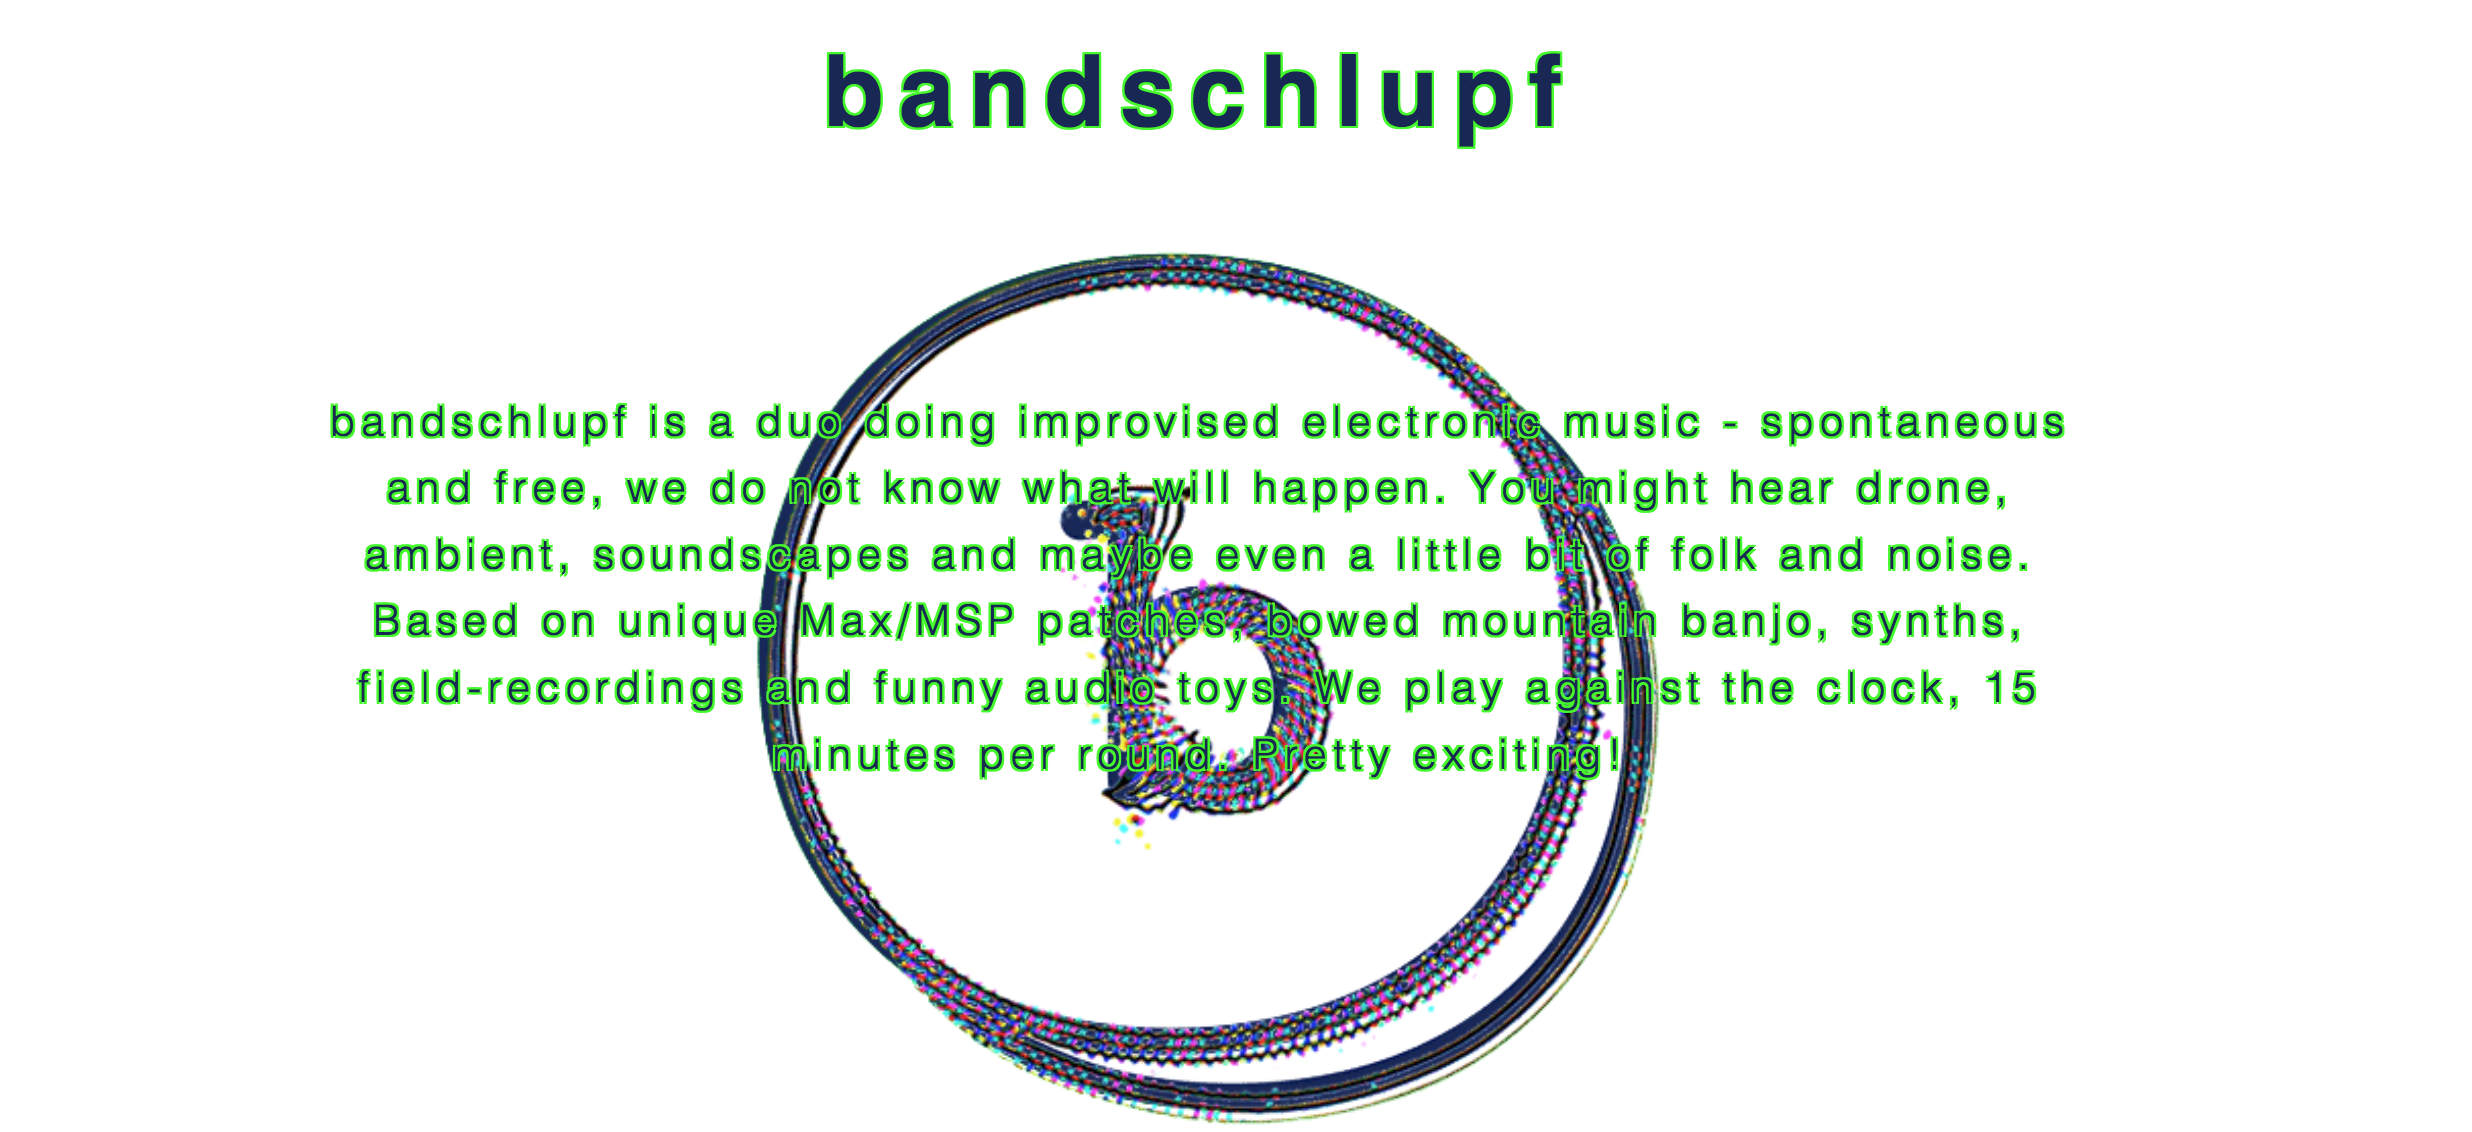 Bandschlupf